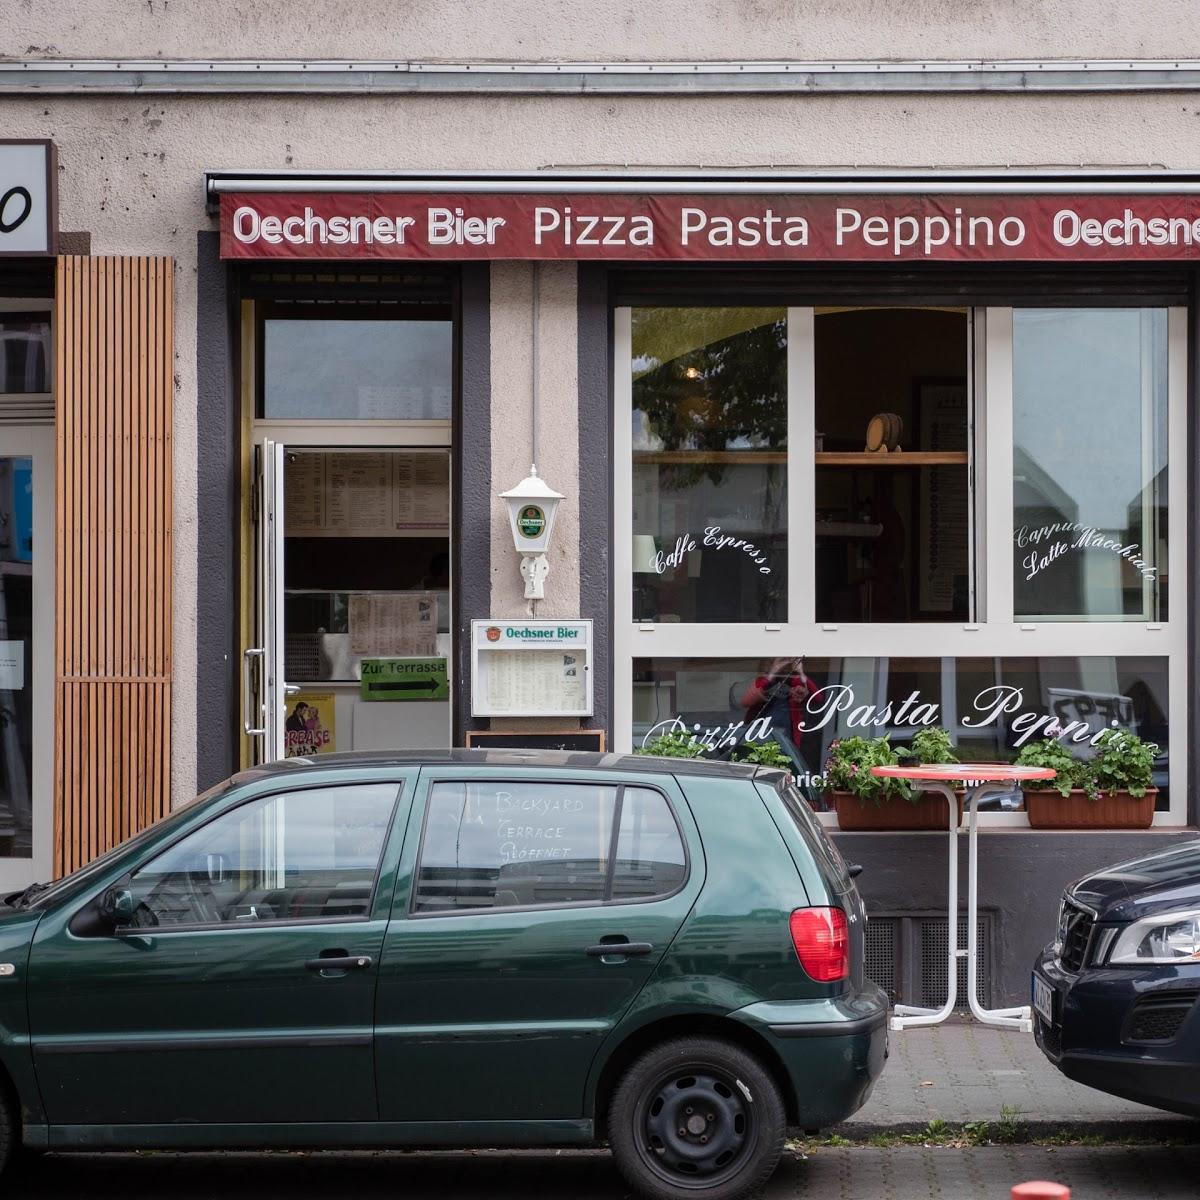 Restaurant "Pizzeria Peppino" in Frankfurt am Main